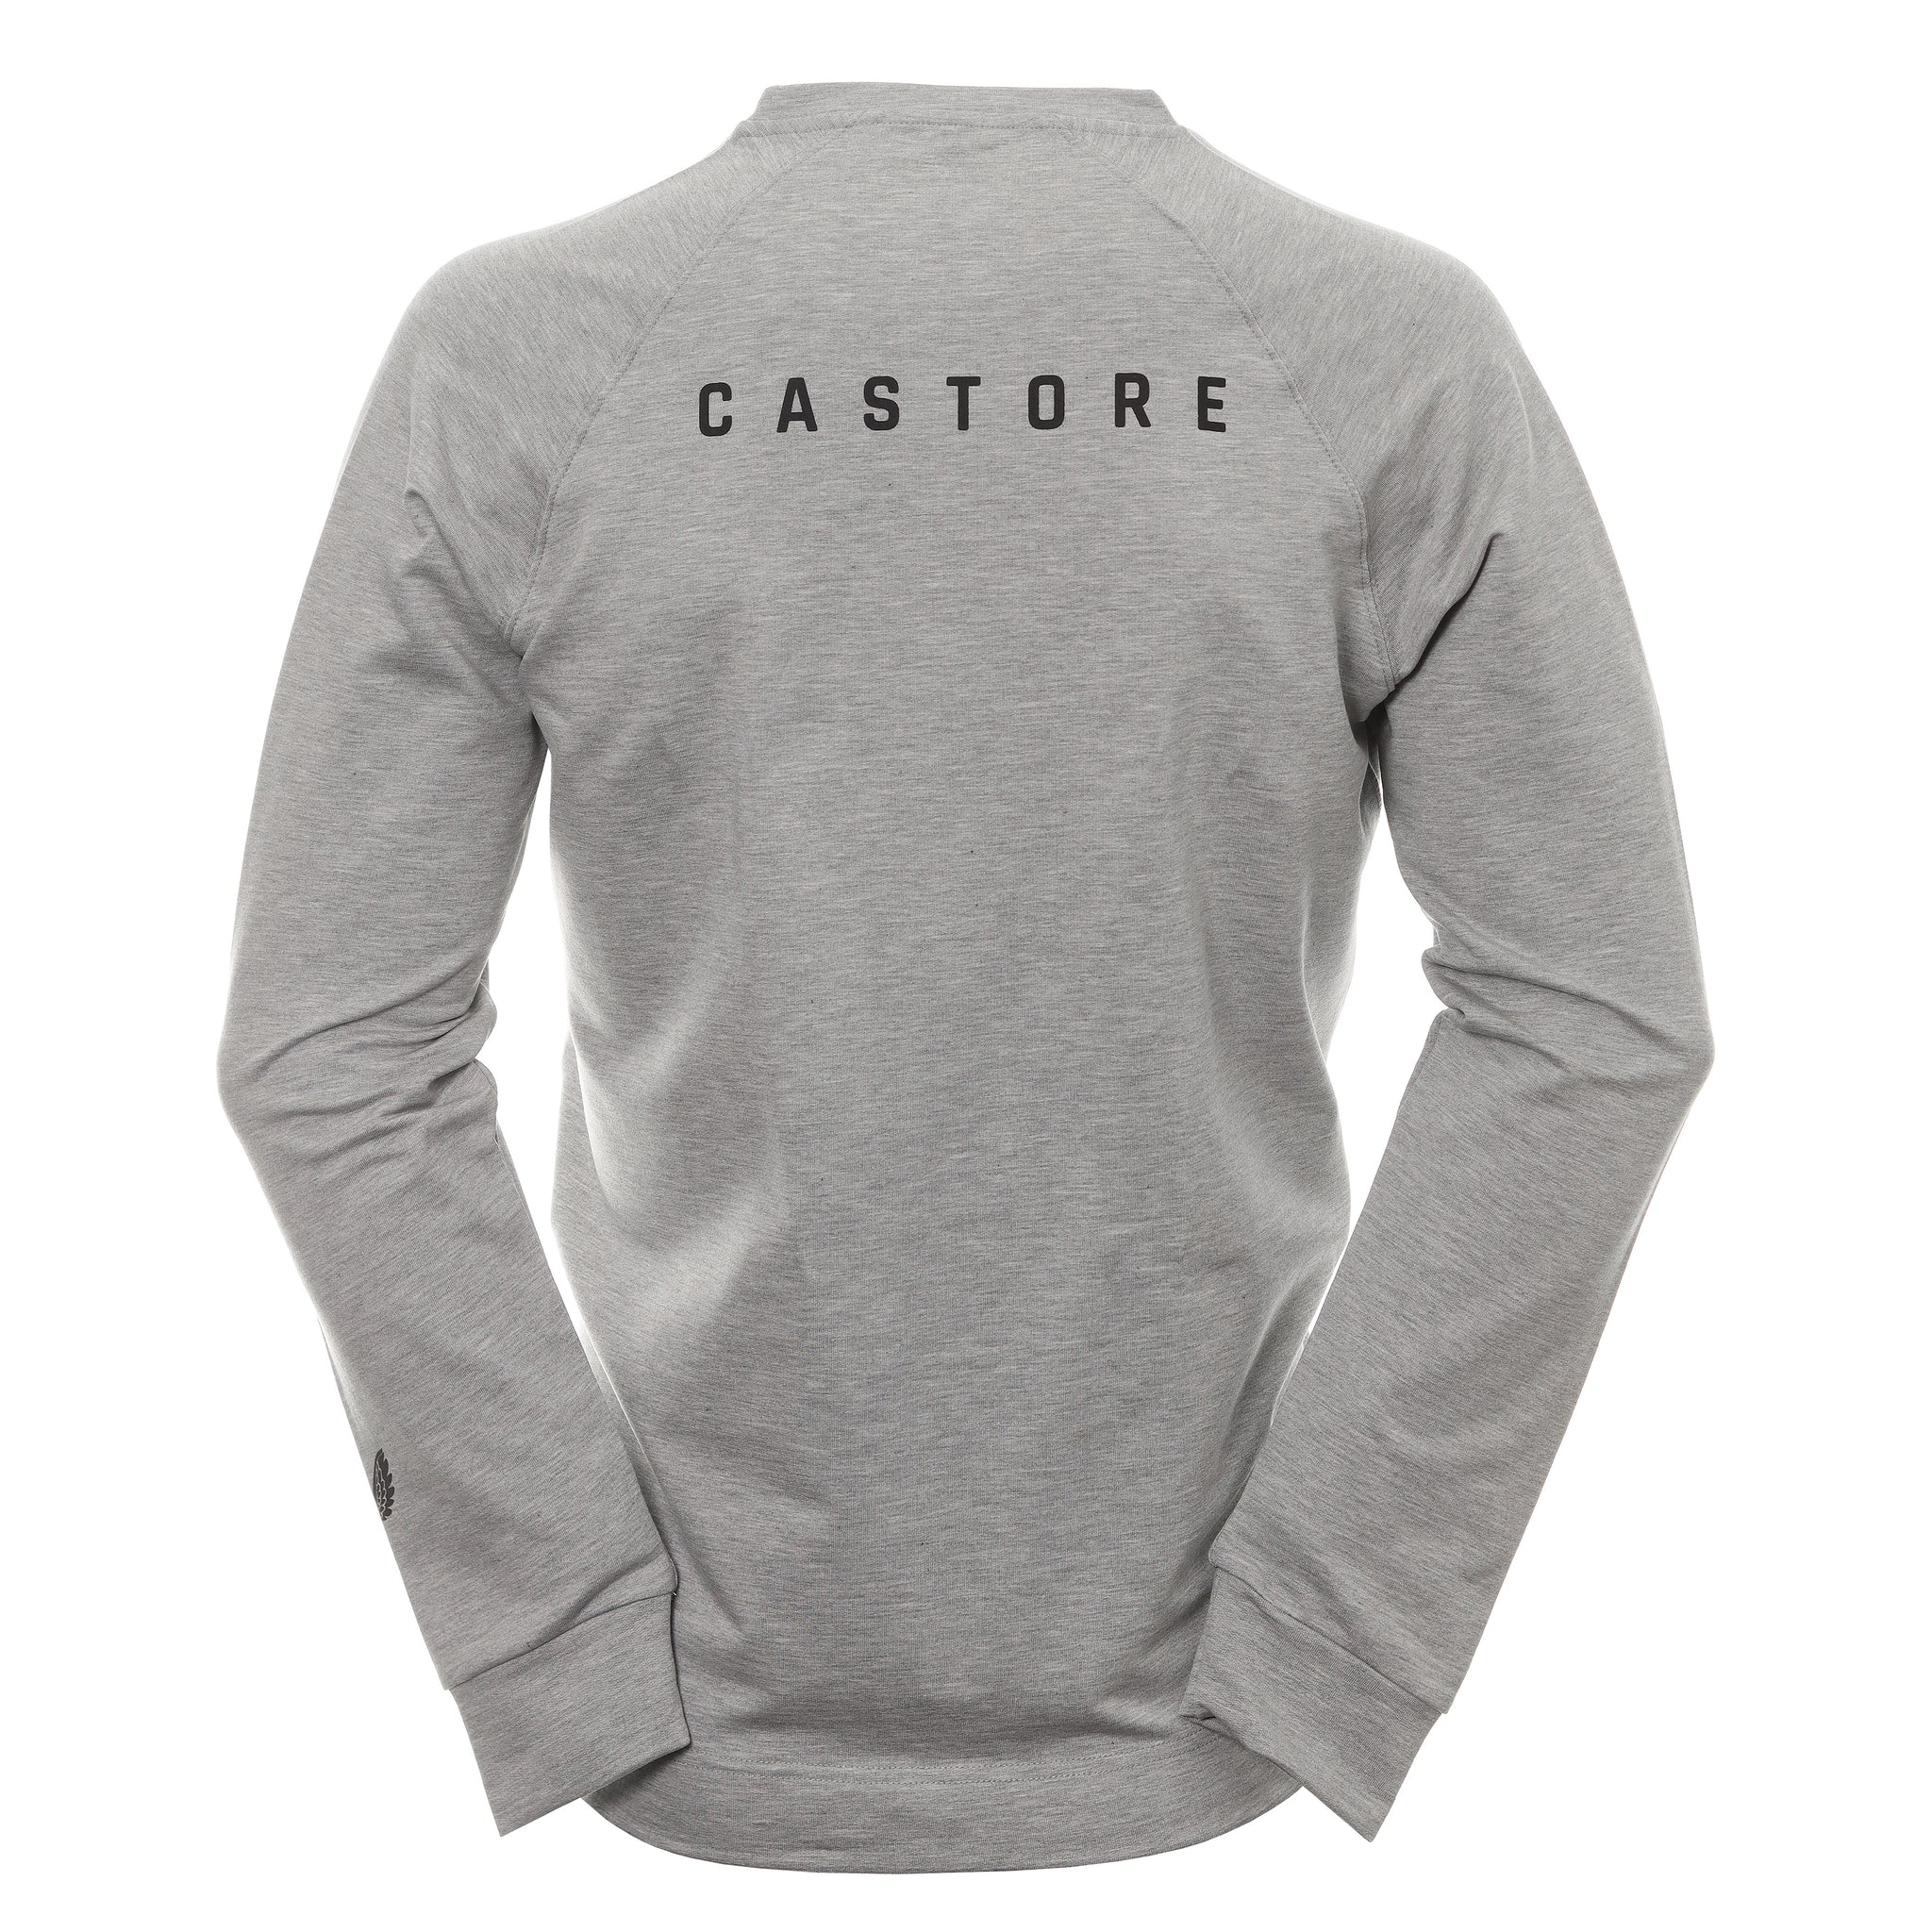 castore-graphic-print-crew-neck-sweater-cma40062-mist